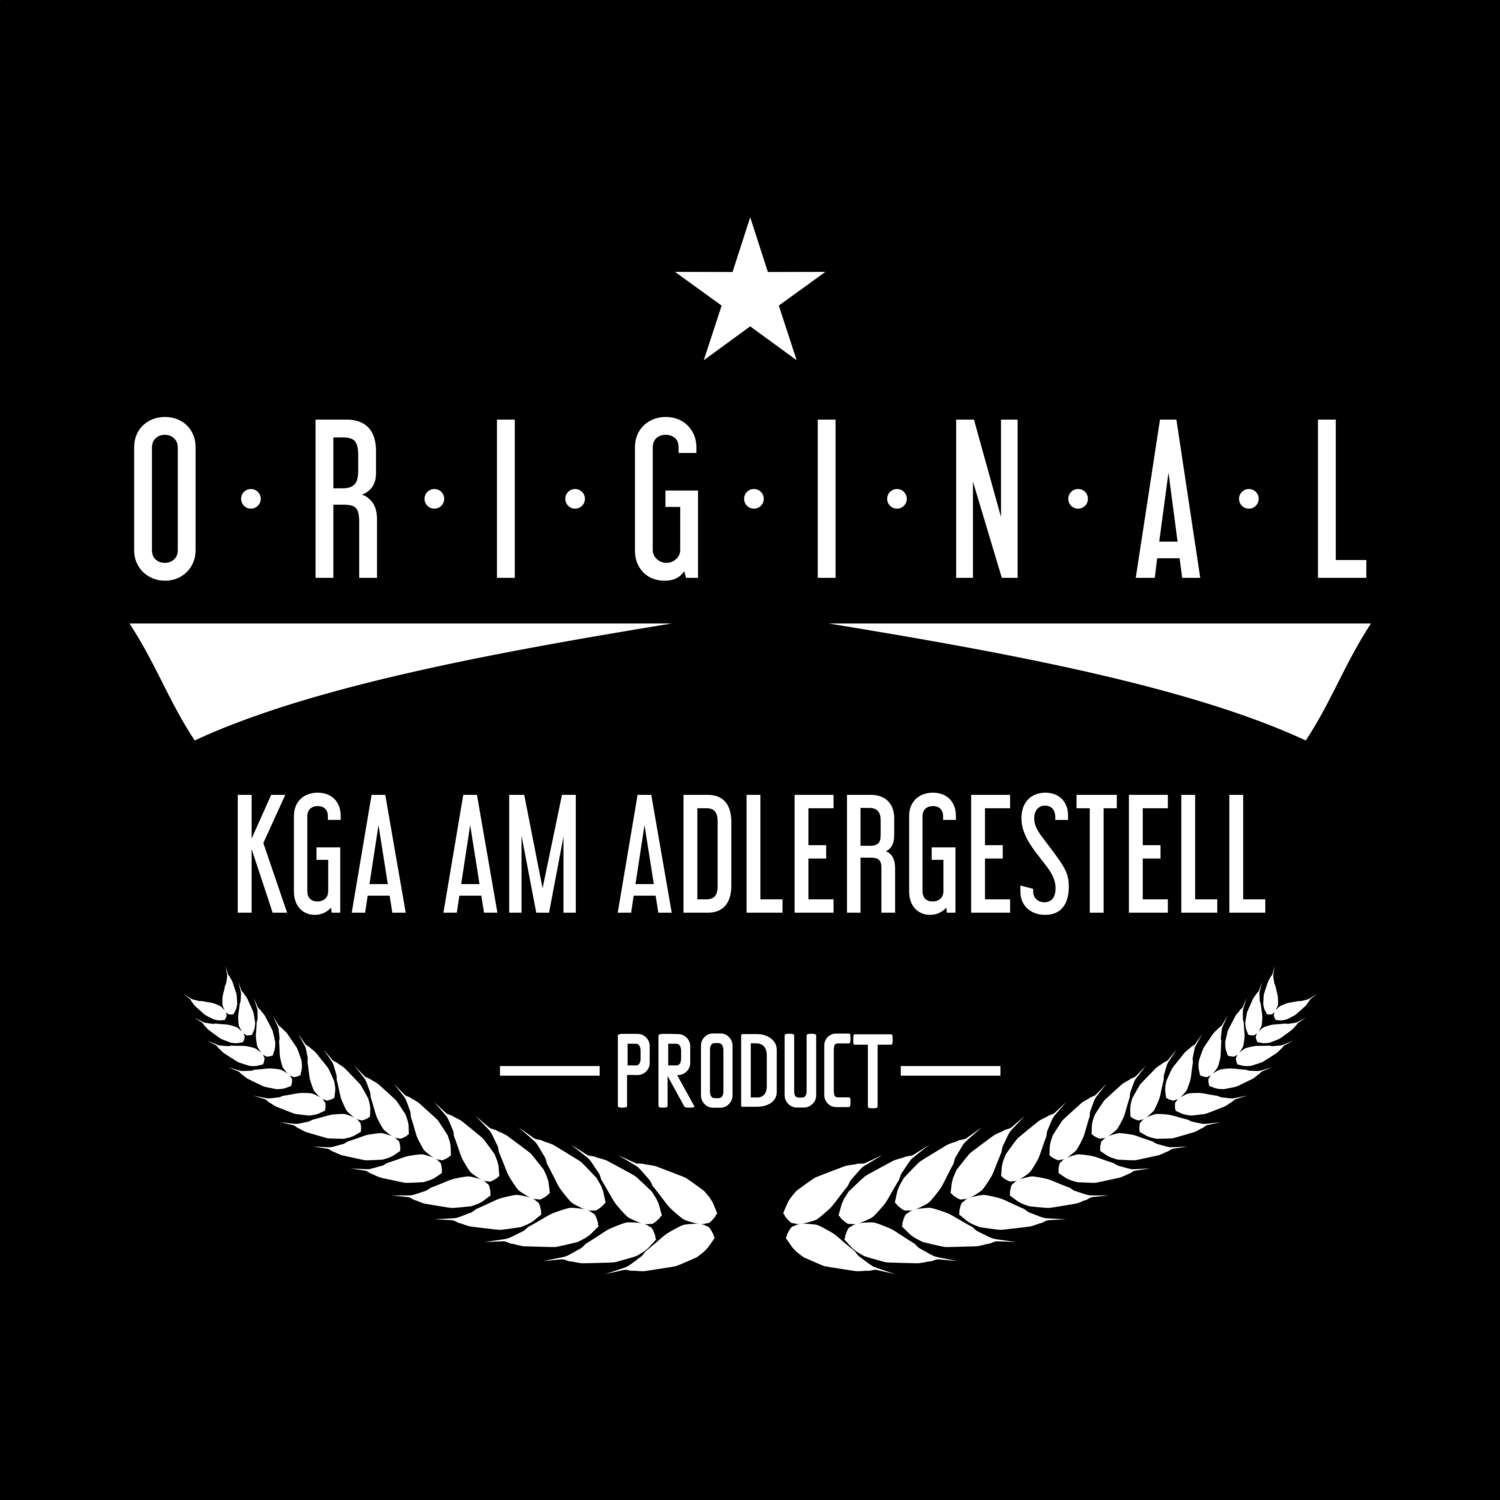 KGA Am Adlergestell T-Shirt »Original Product«